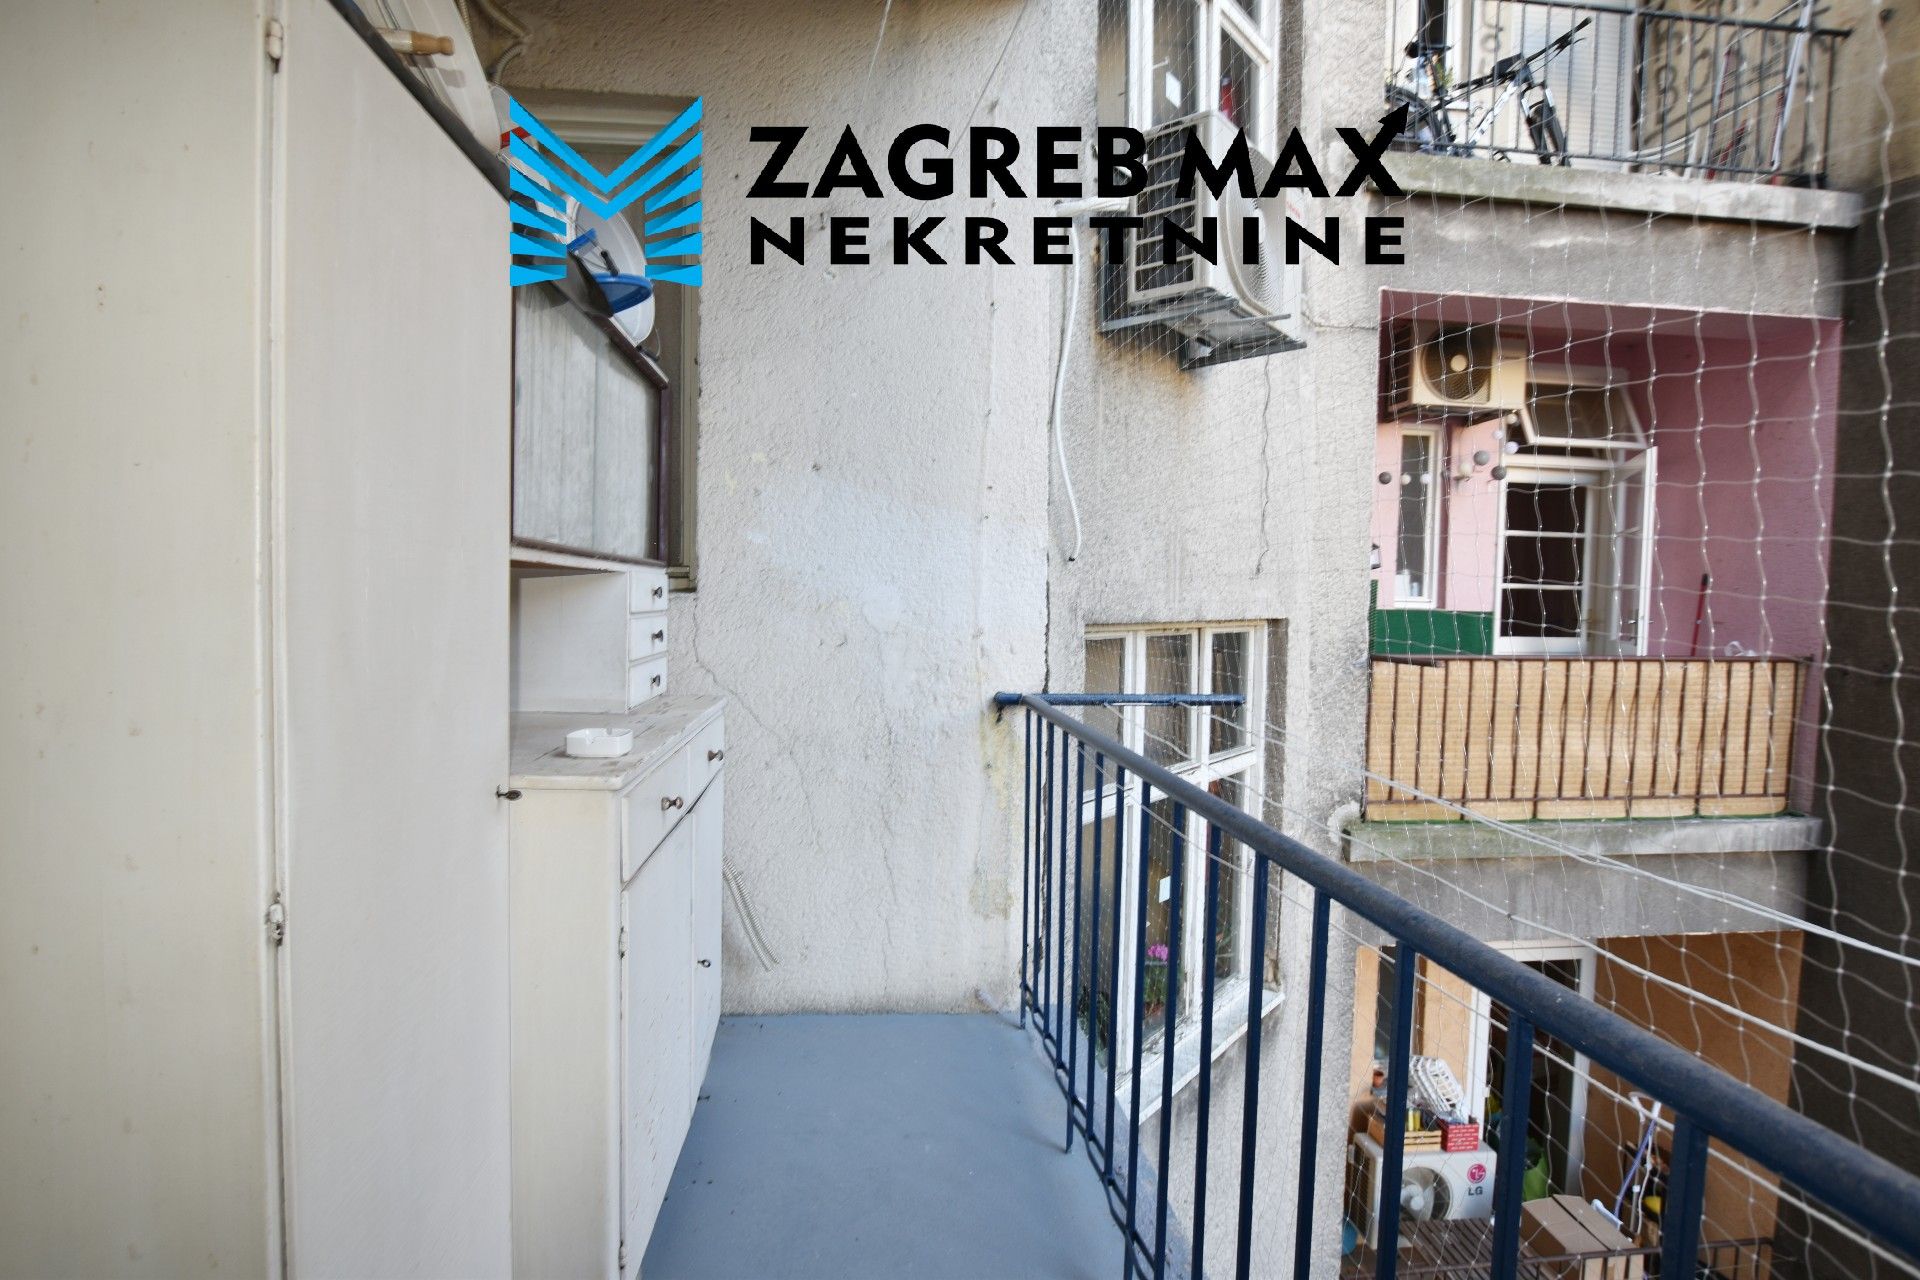 Zagreb - DONJI GRAD Komforan 3soban stan 70 m2, 2 balkona, lift, BEZ PROVIZIJE